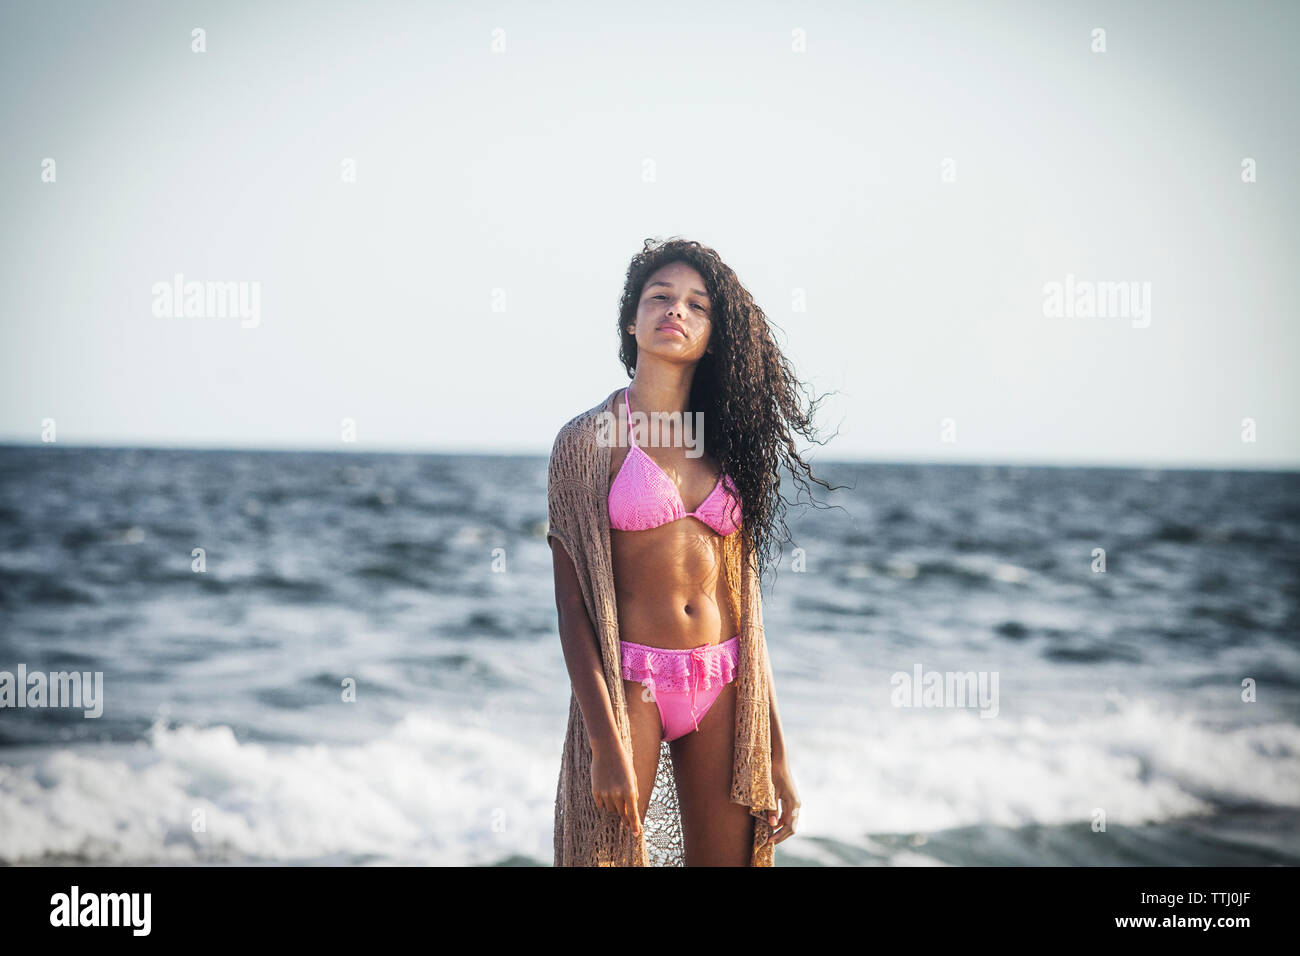 Portrait of girl in bikini standing against sea Stock Photo